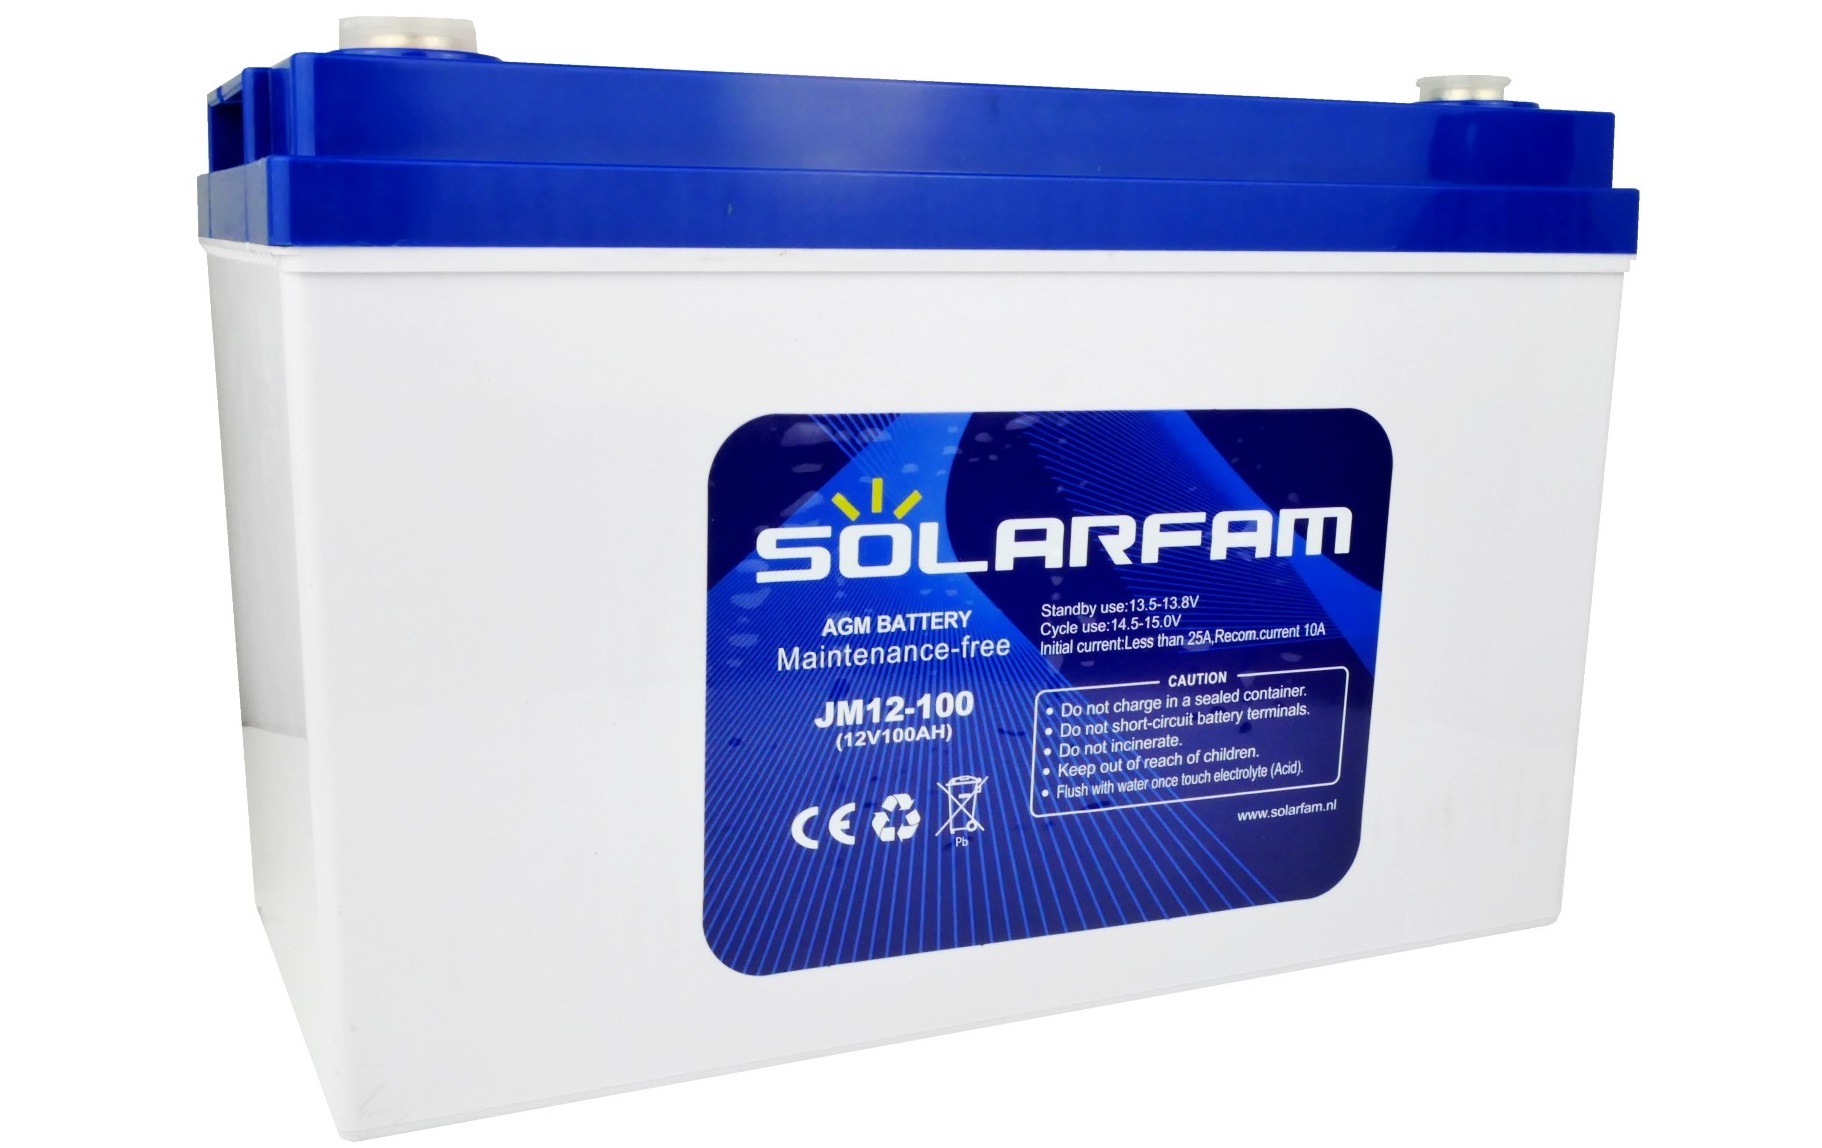 Akumulatory Solarfam Lead Carbon i AGM